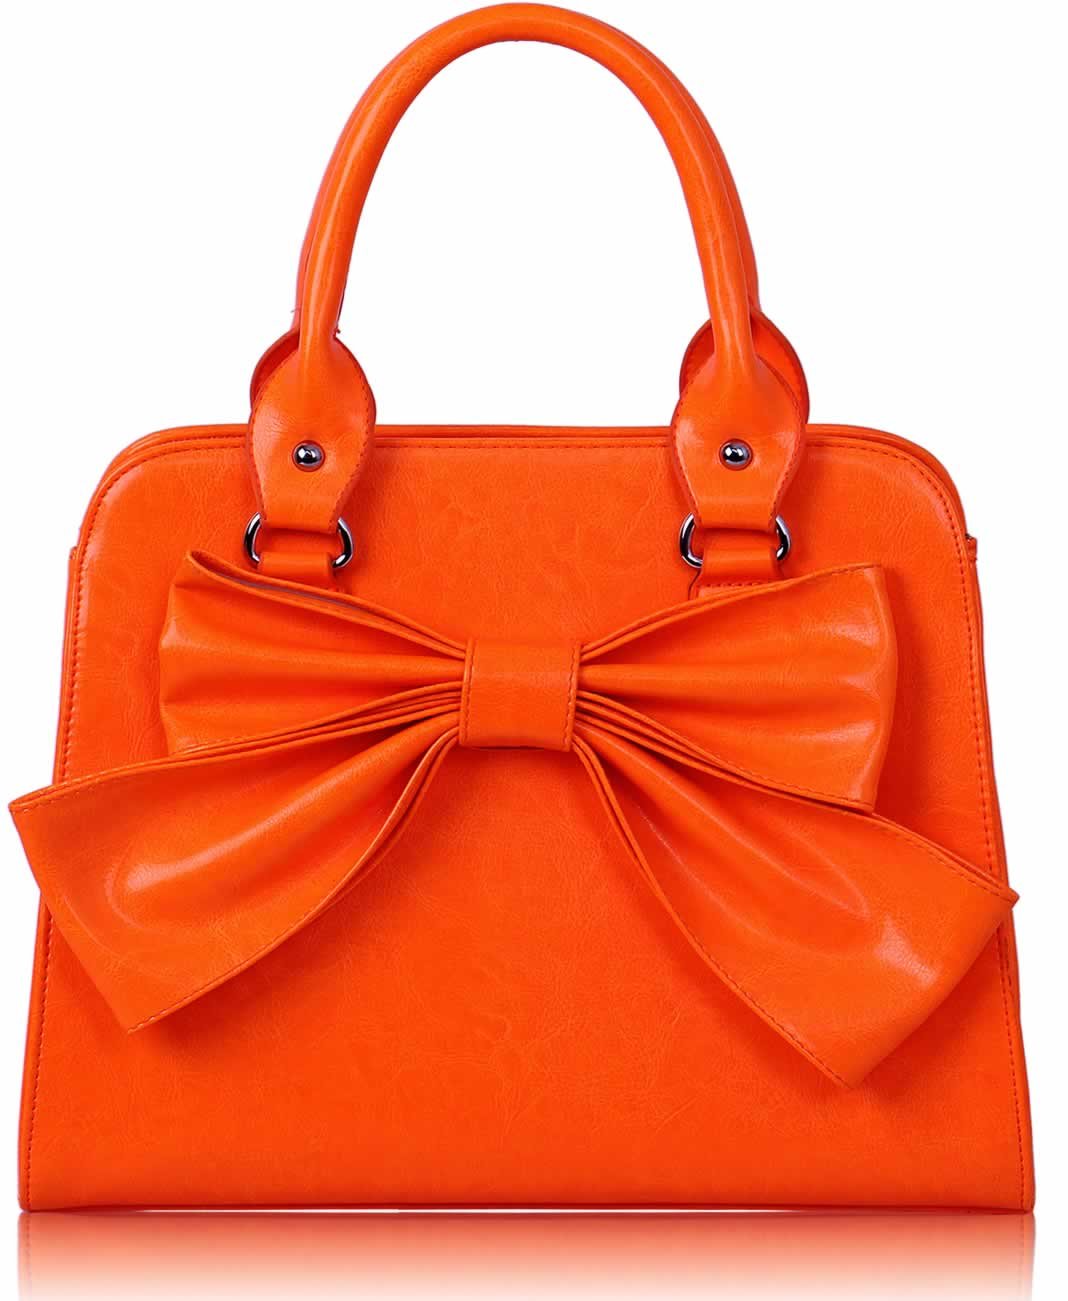 Wholesale Orange Patent Bow Tote Bag